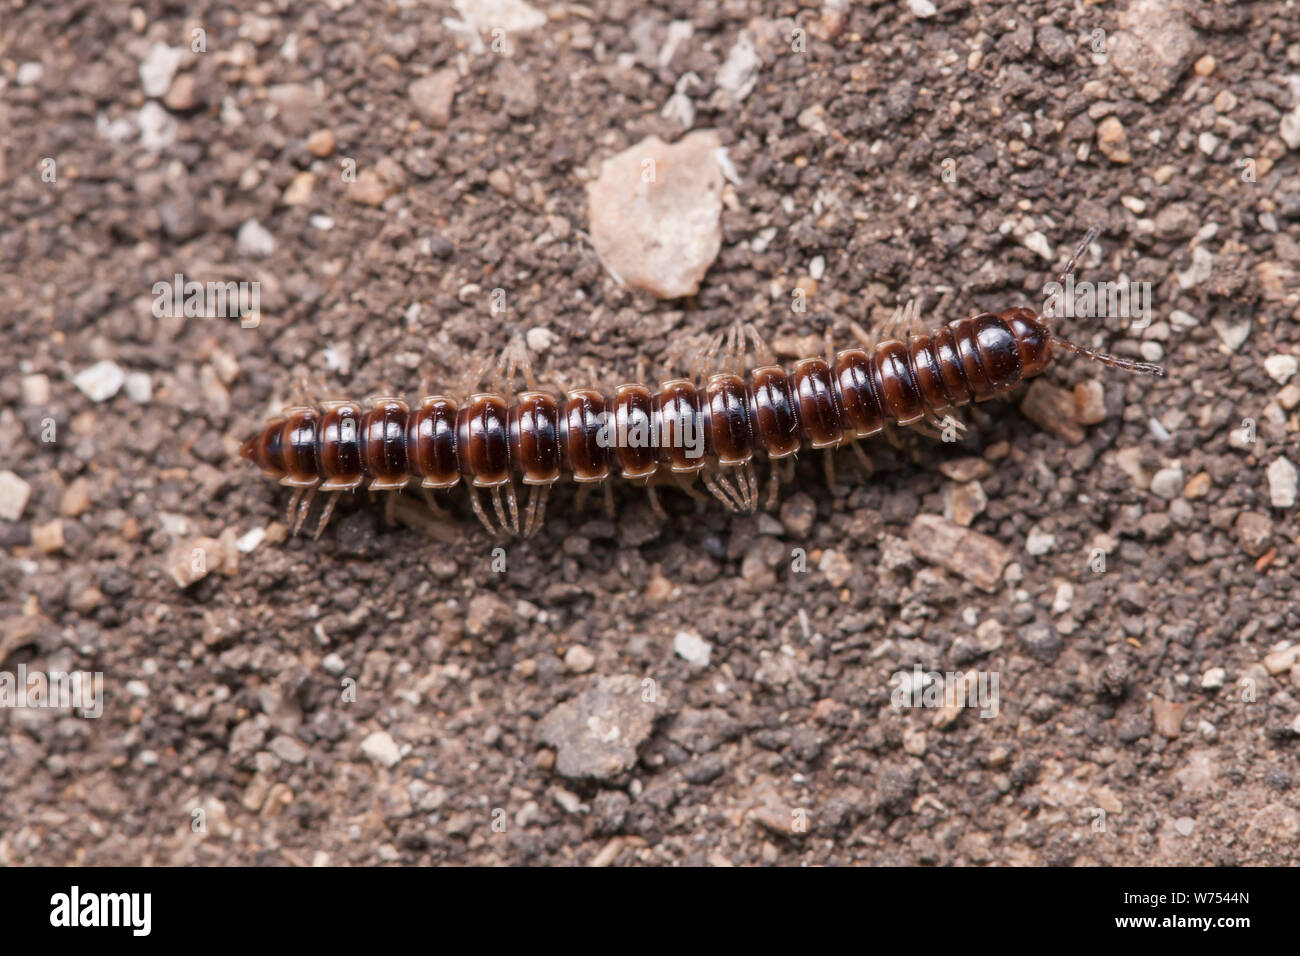 A Greenhouse Millipede (Oxidus gracilis) moves along a dirt trail. Stock Photo